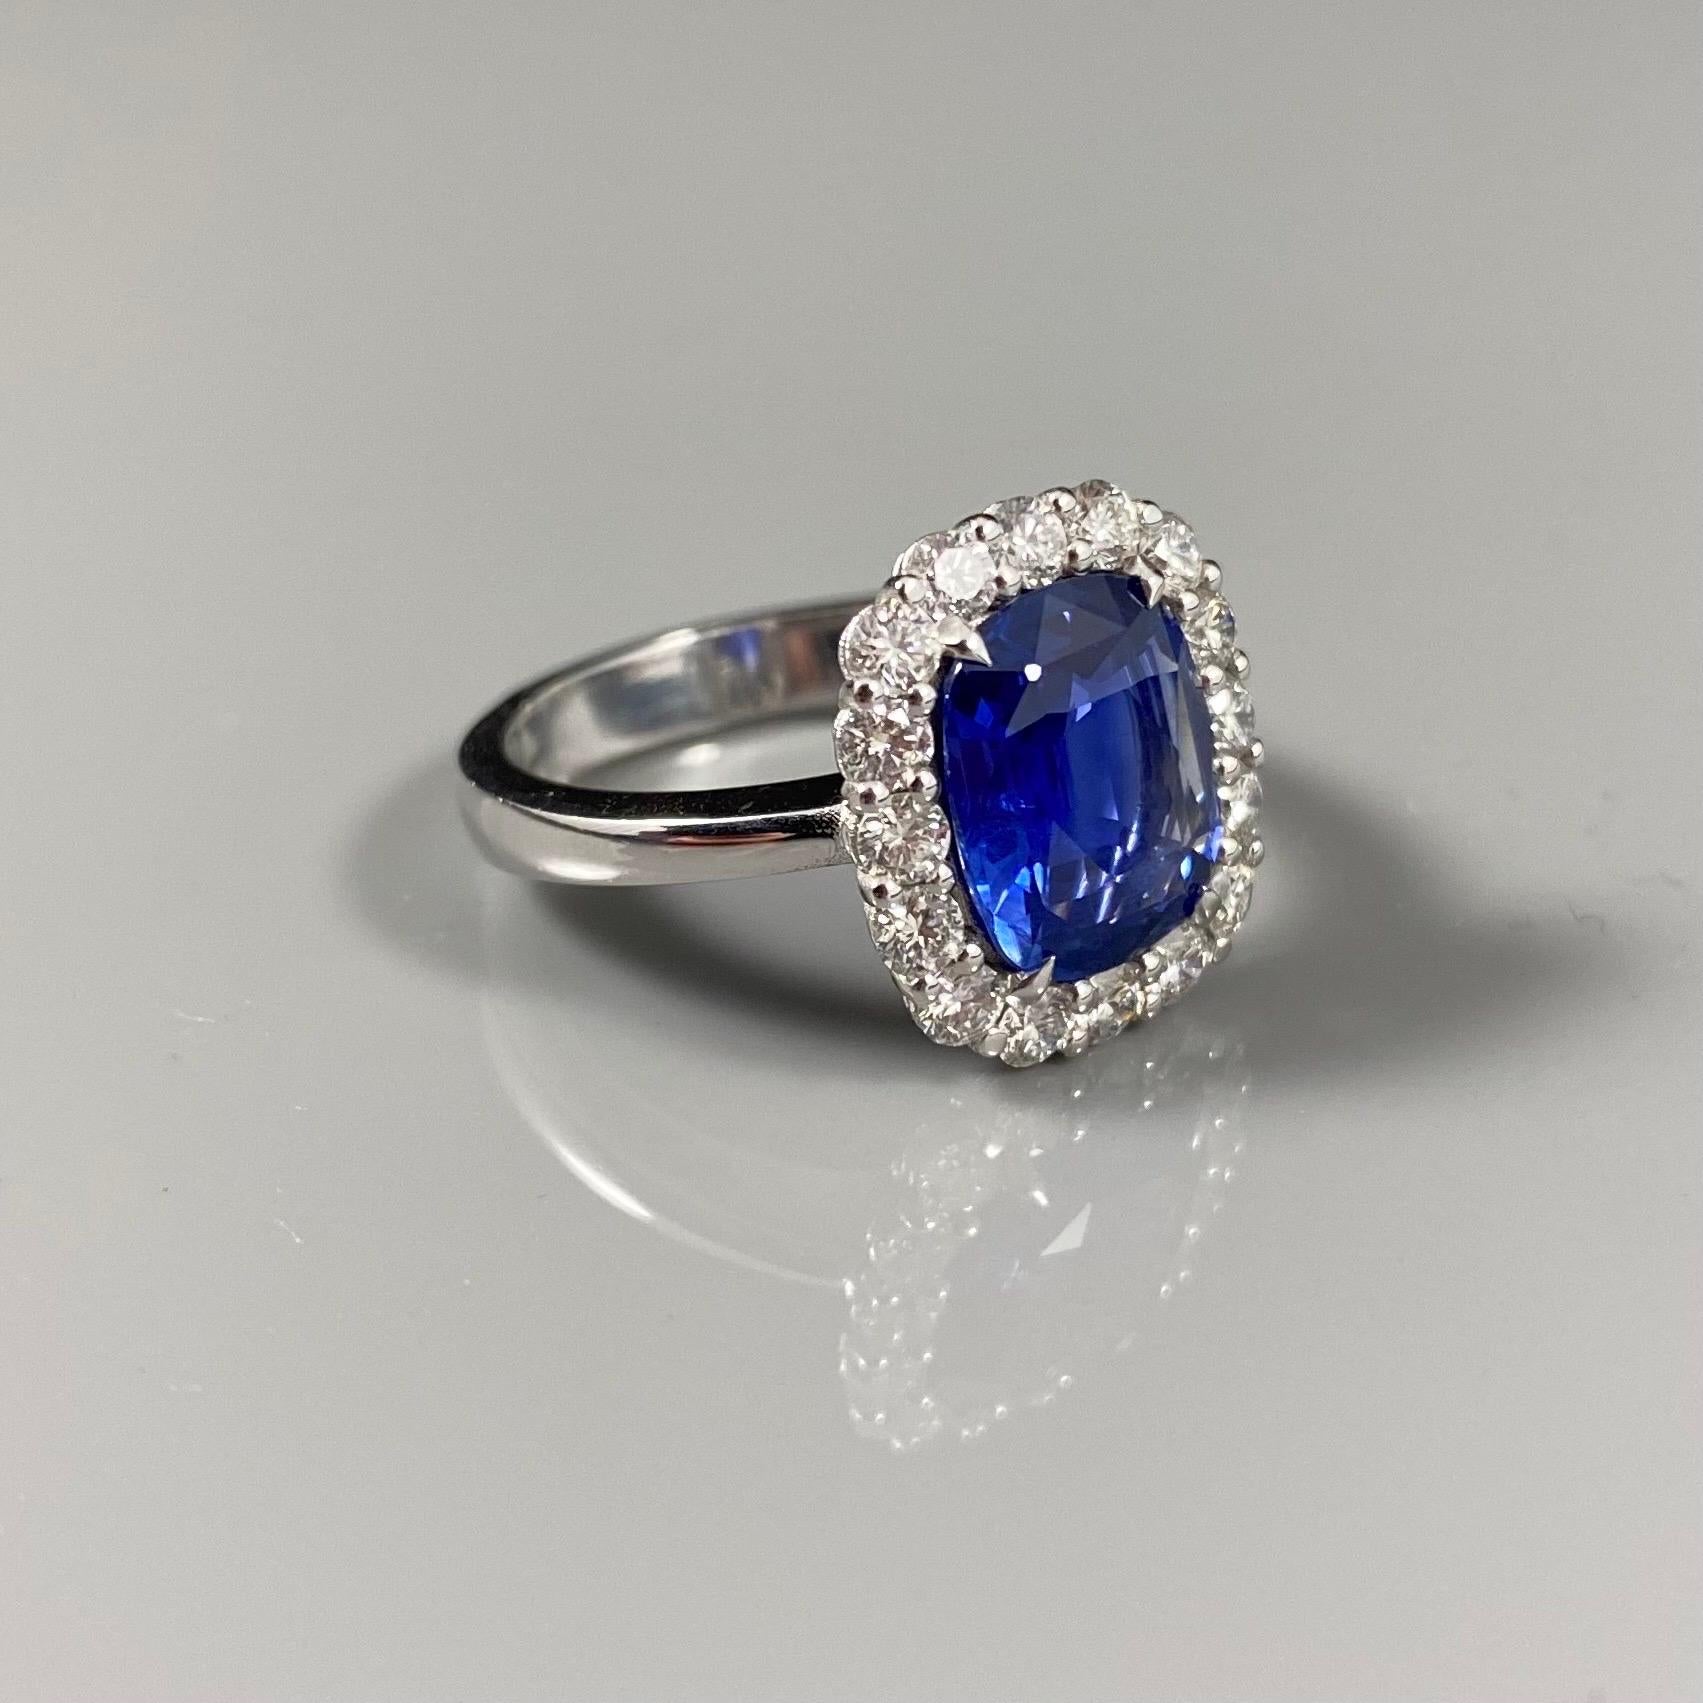 3.1 Carat Cornflower Blue Sapphire Diamond Cluster Engagement Ring White Gold 7